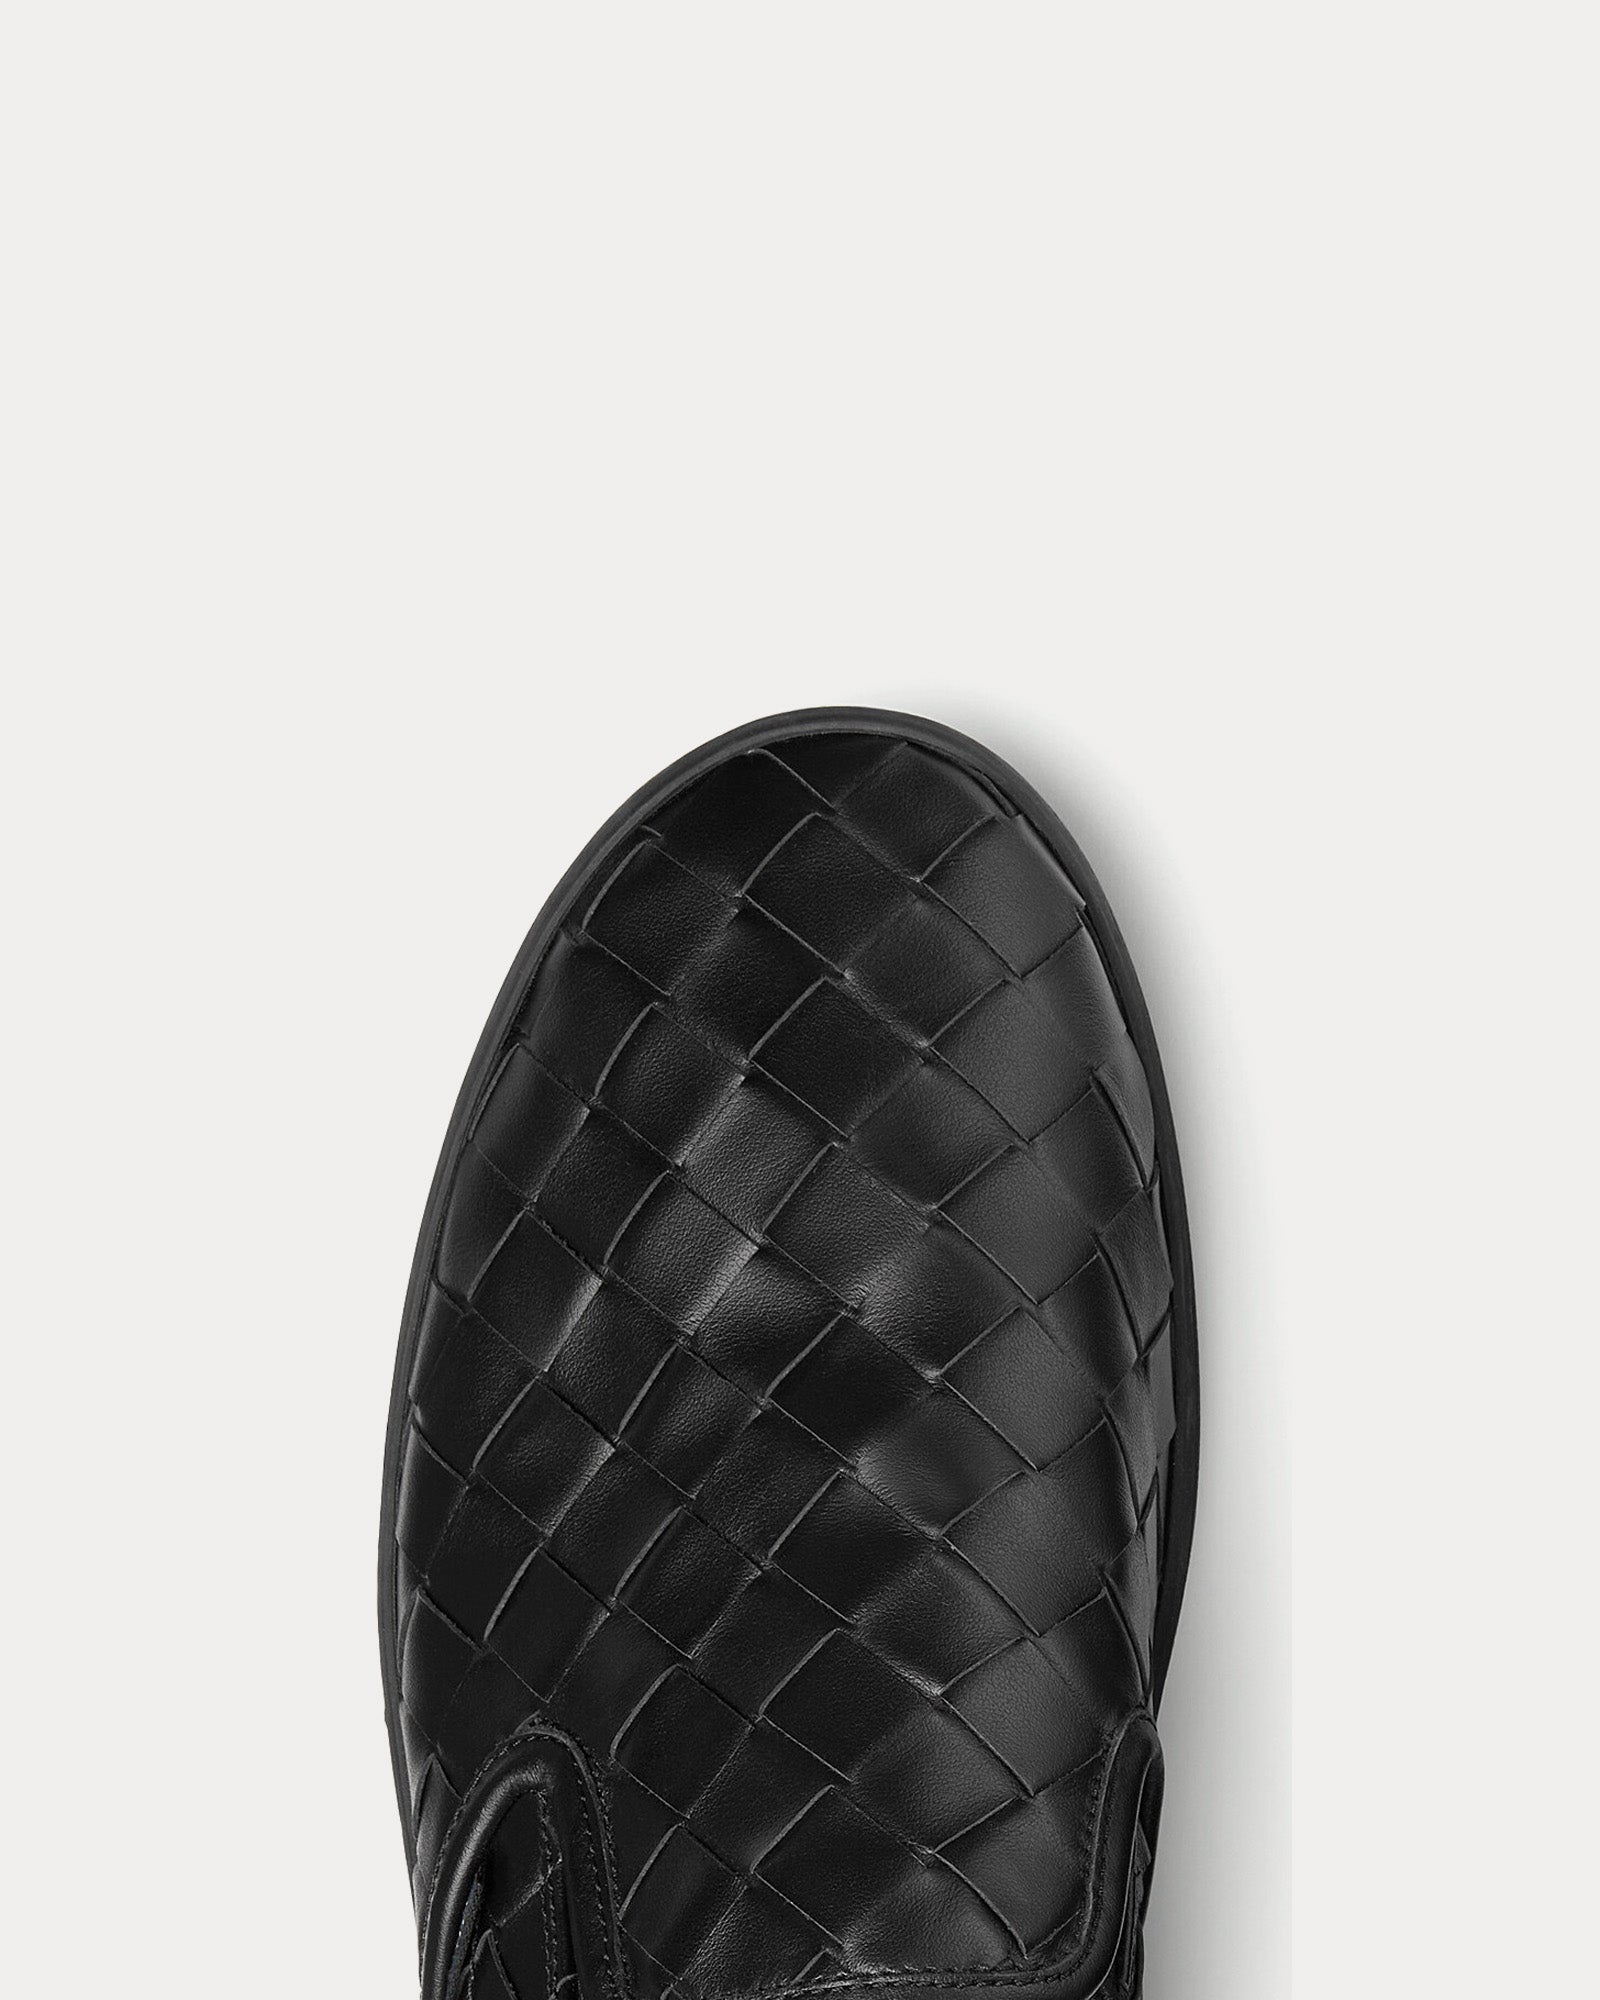 Bottega Veneta - Sawyer Intrecciato Black Slip On Sneakers